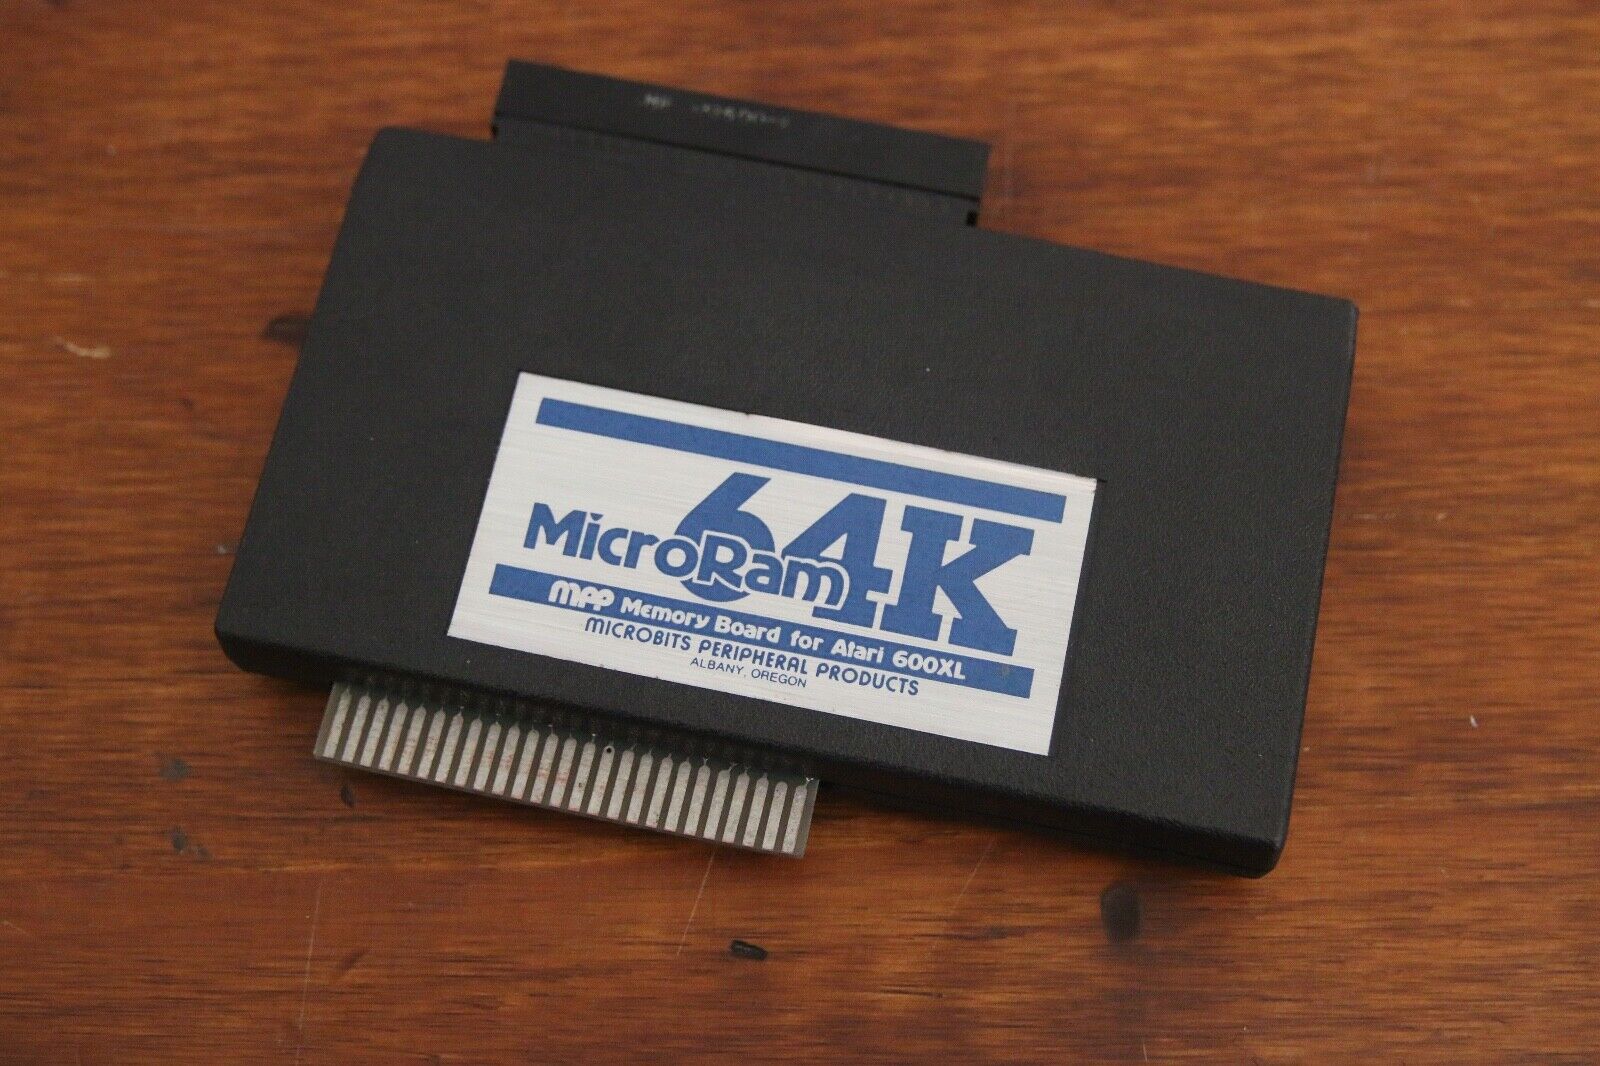 MicroRam MPP Memory Board for Atari 600XL 64k Microbits Peripheral AS-IS